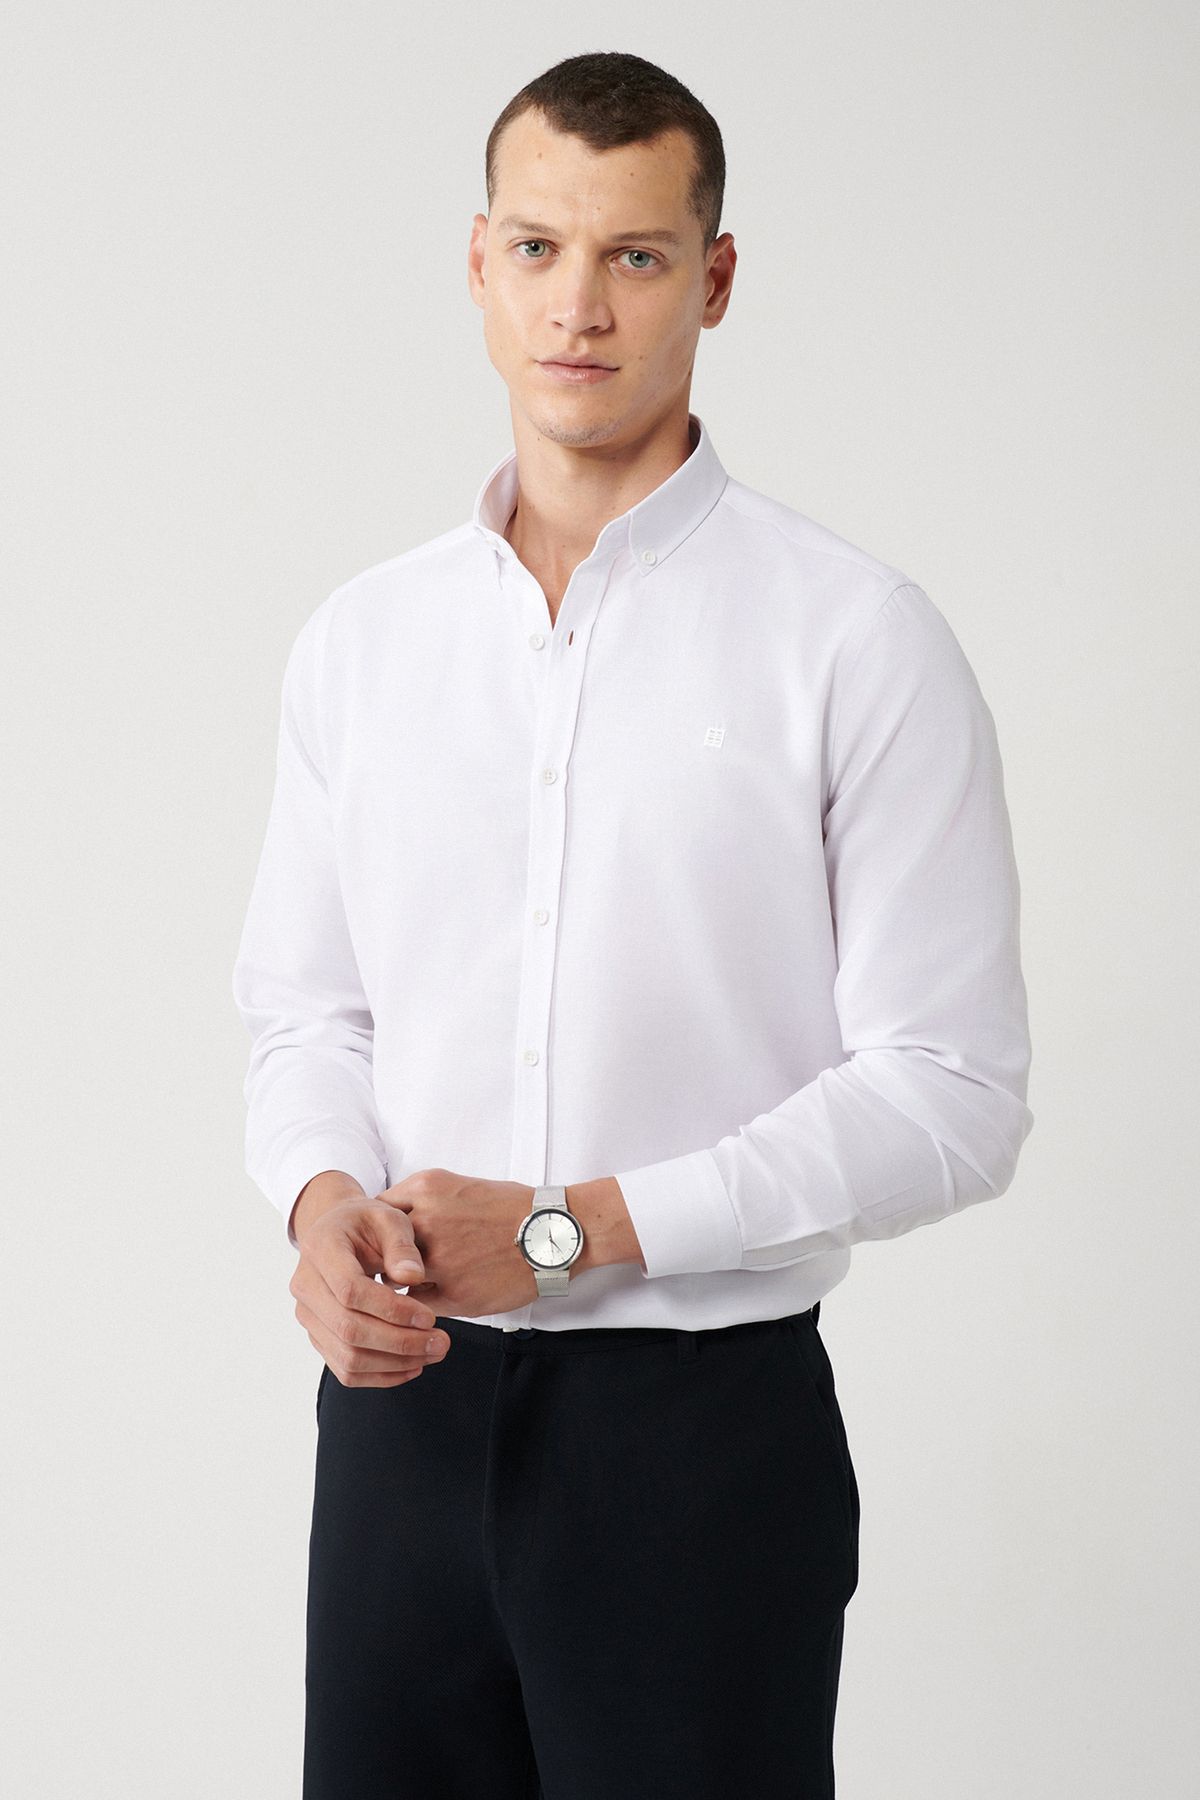 Avva پیراهن برش معمولی یقه دکمه دار سفید مردانه آسان اتو آکسفورد با تناسب استاندارد E002000